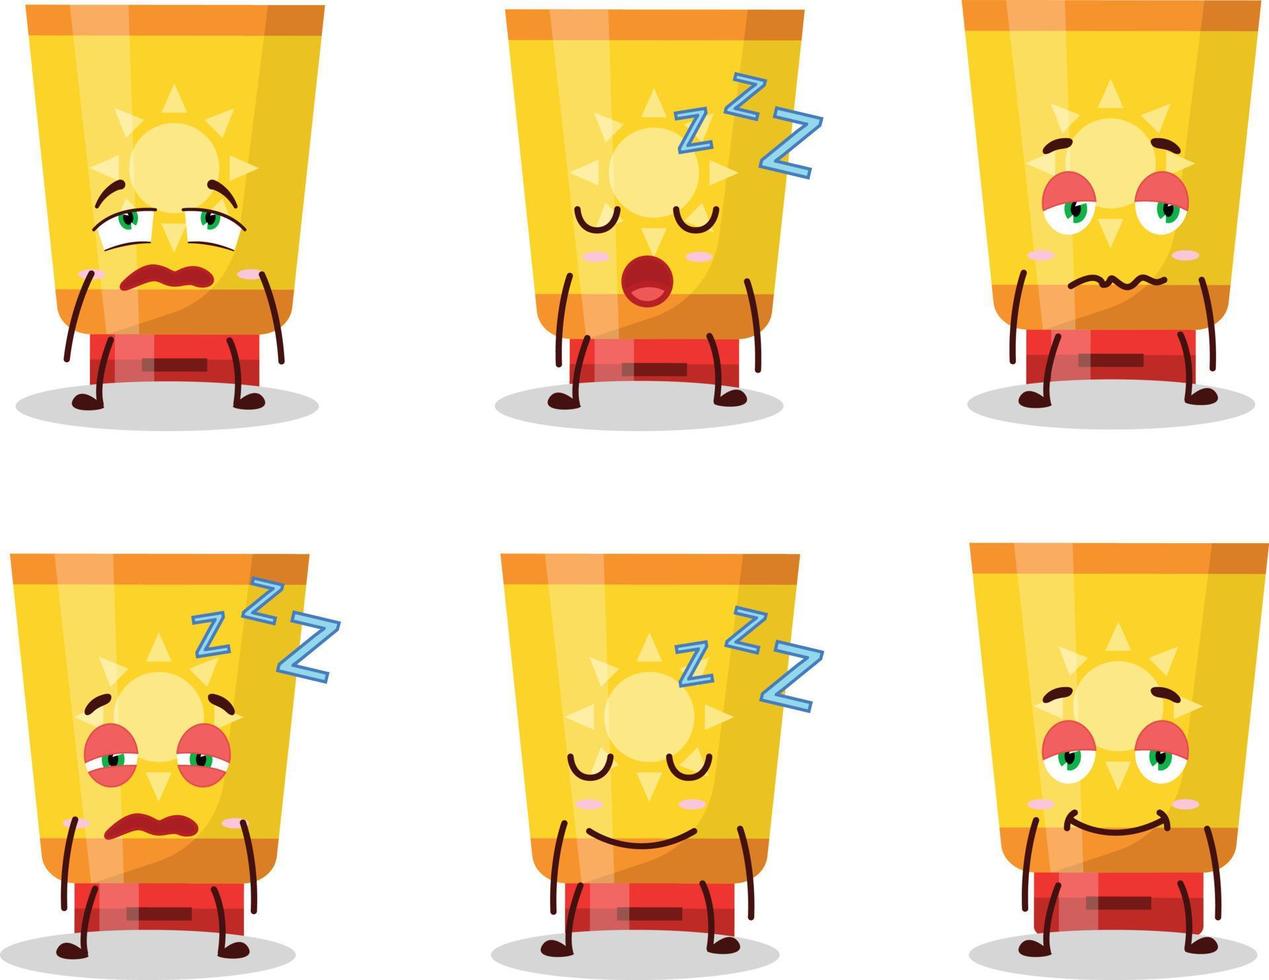 Cartoon character of sun block with sleepy expression vector